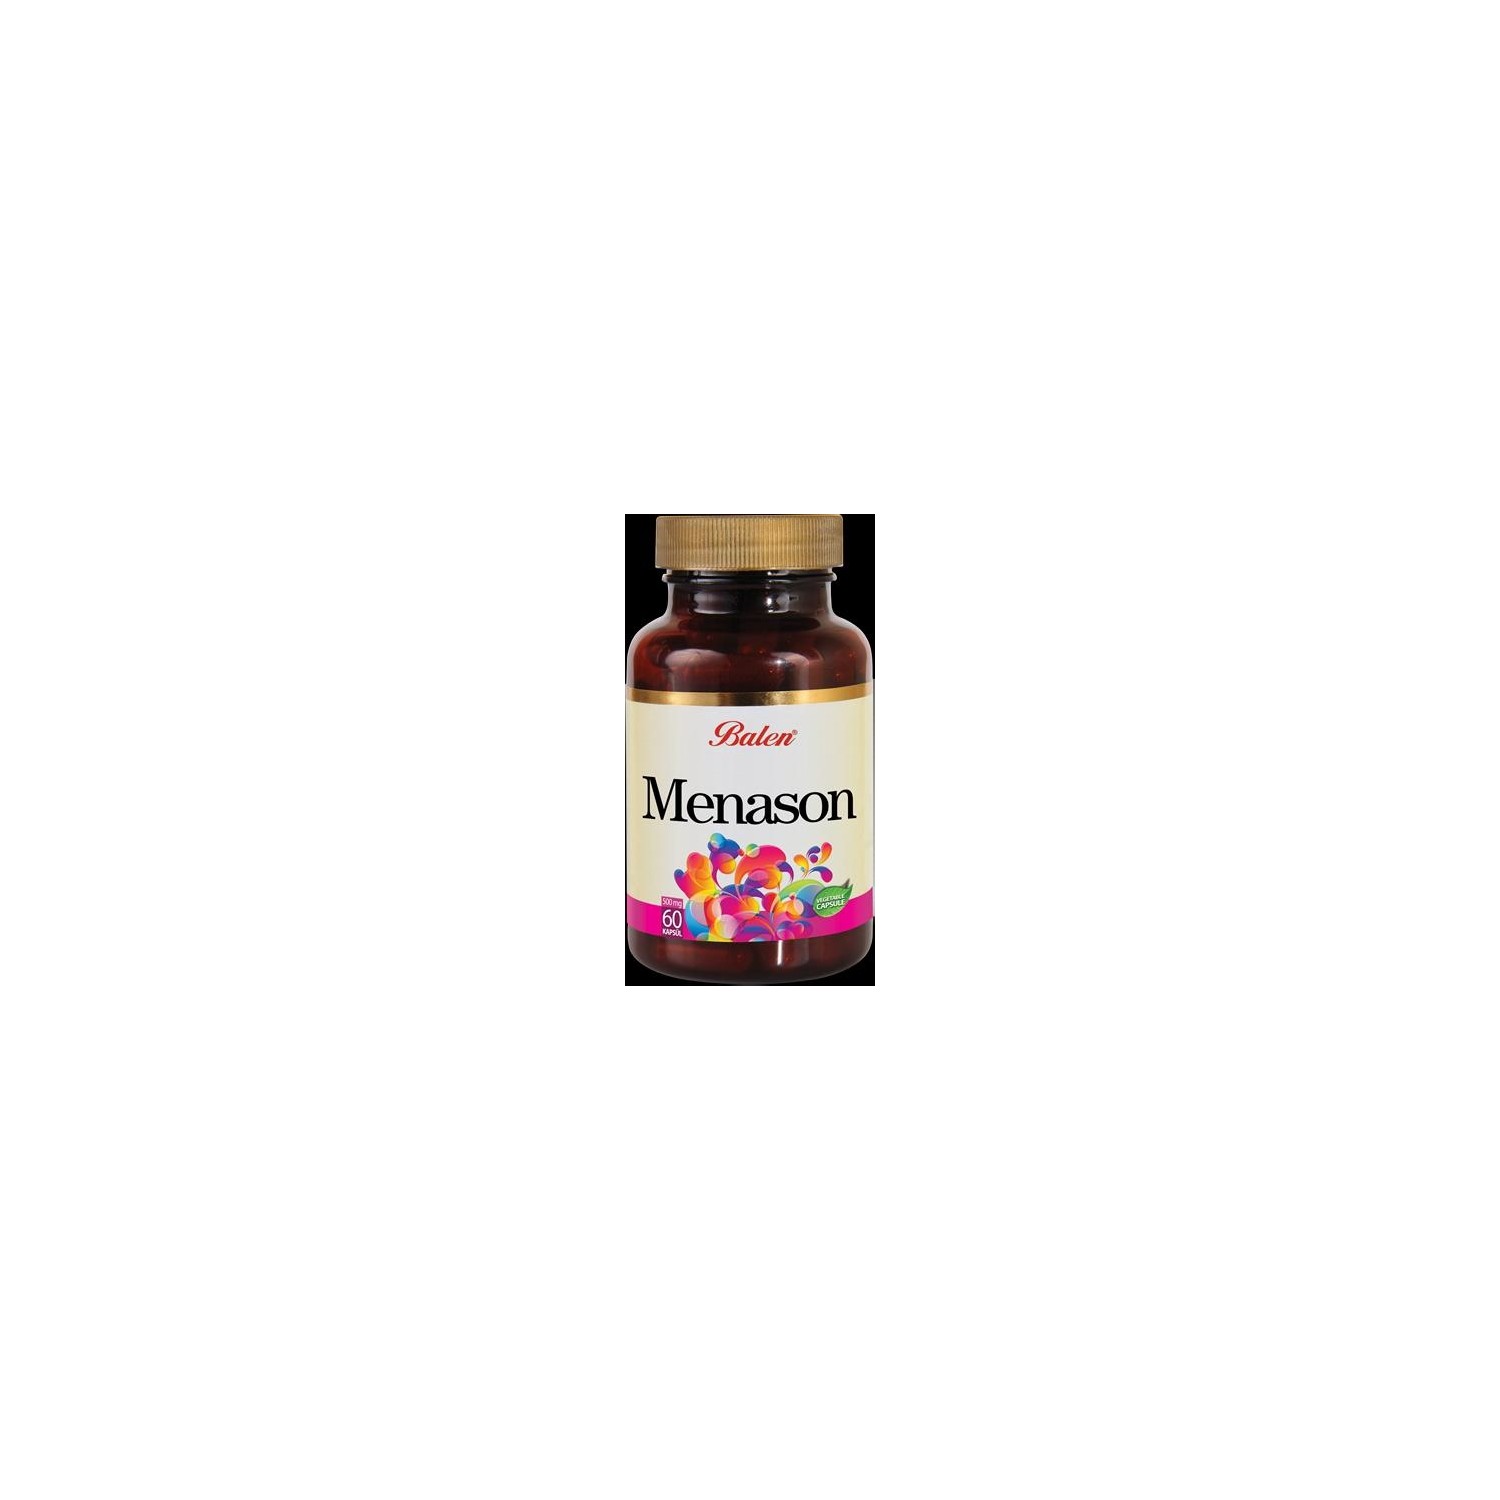 Активная добавка Balen менасон, 60 капсул, 520 мг themra epimedium herbal mixture paste original 240 gr for power themra